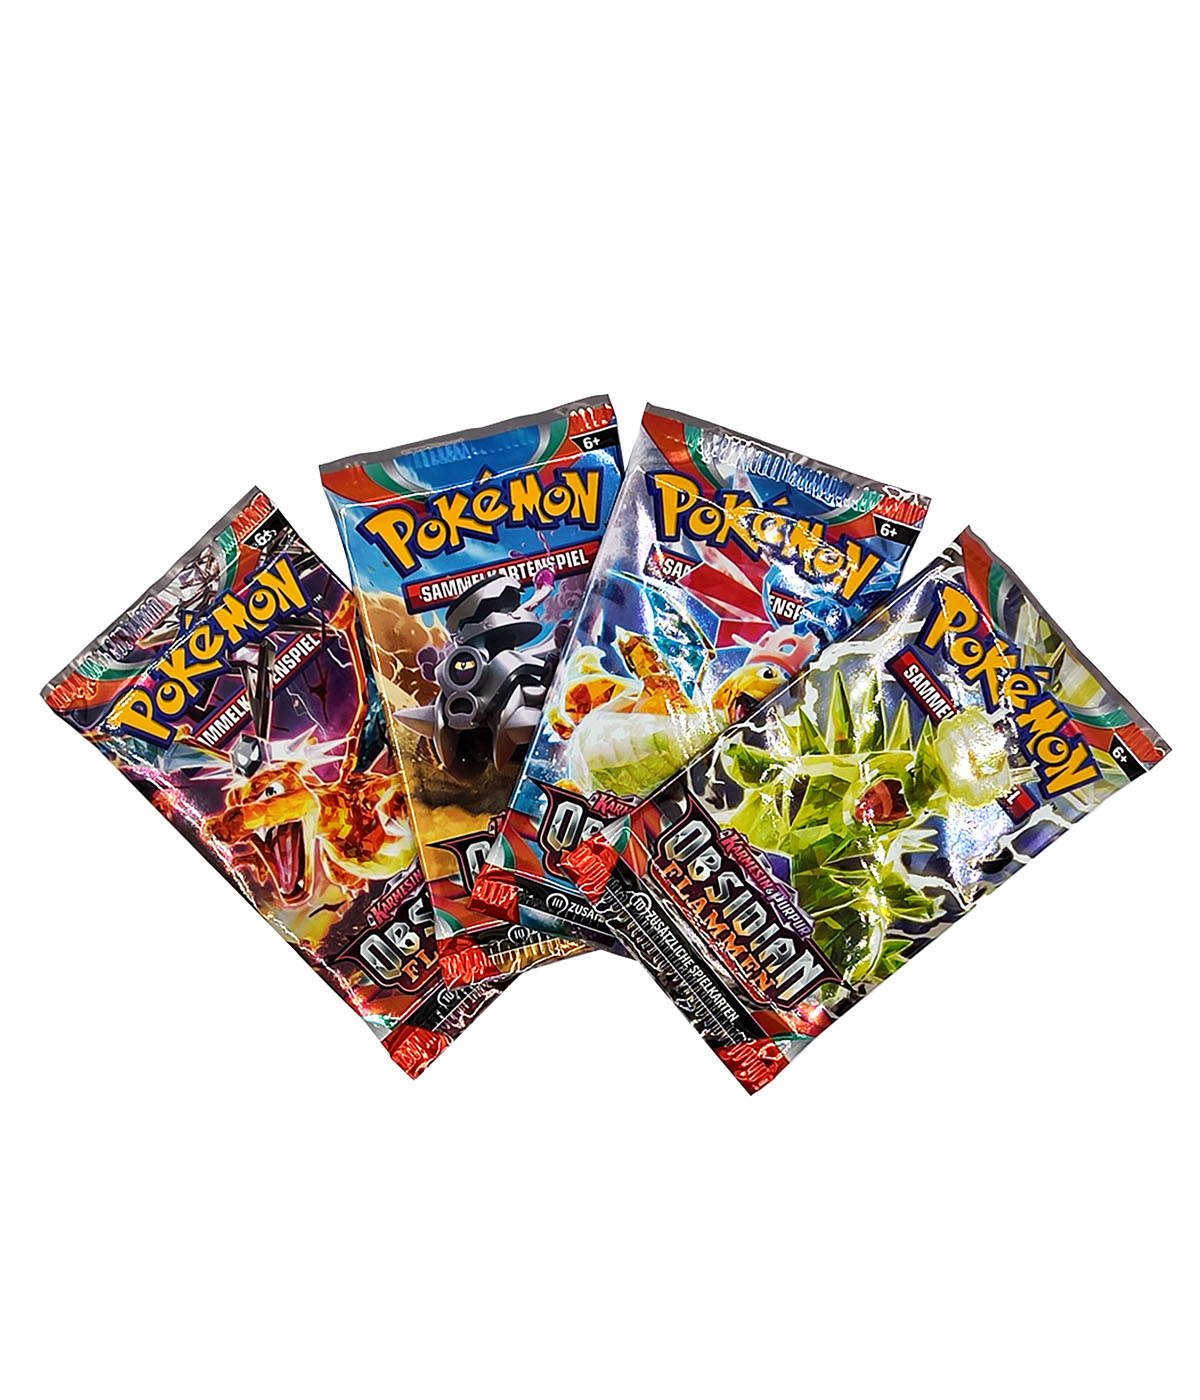 Pokémon 2er Mix-Bundle "Obsidianflammen + Entwicklungen in Paldea" - 2 Displays mit je 18 Boosterpacks